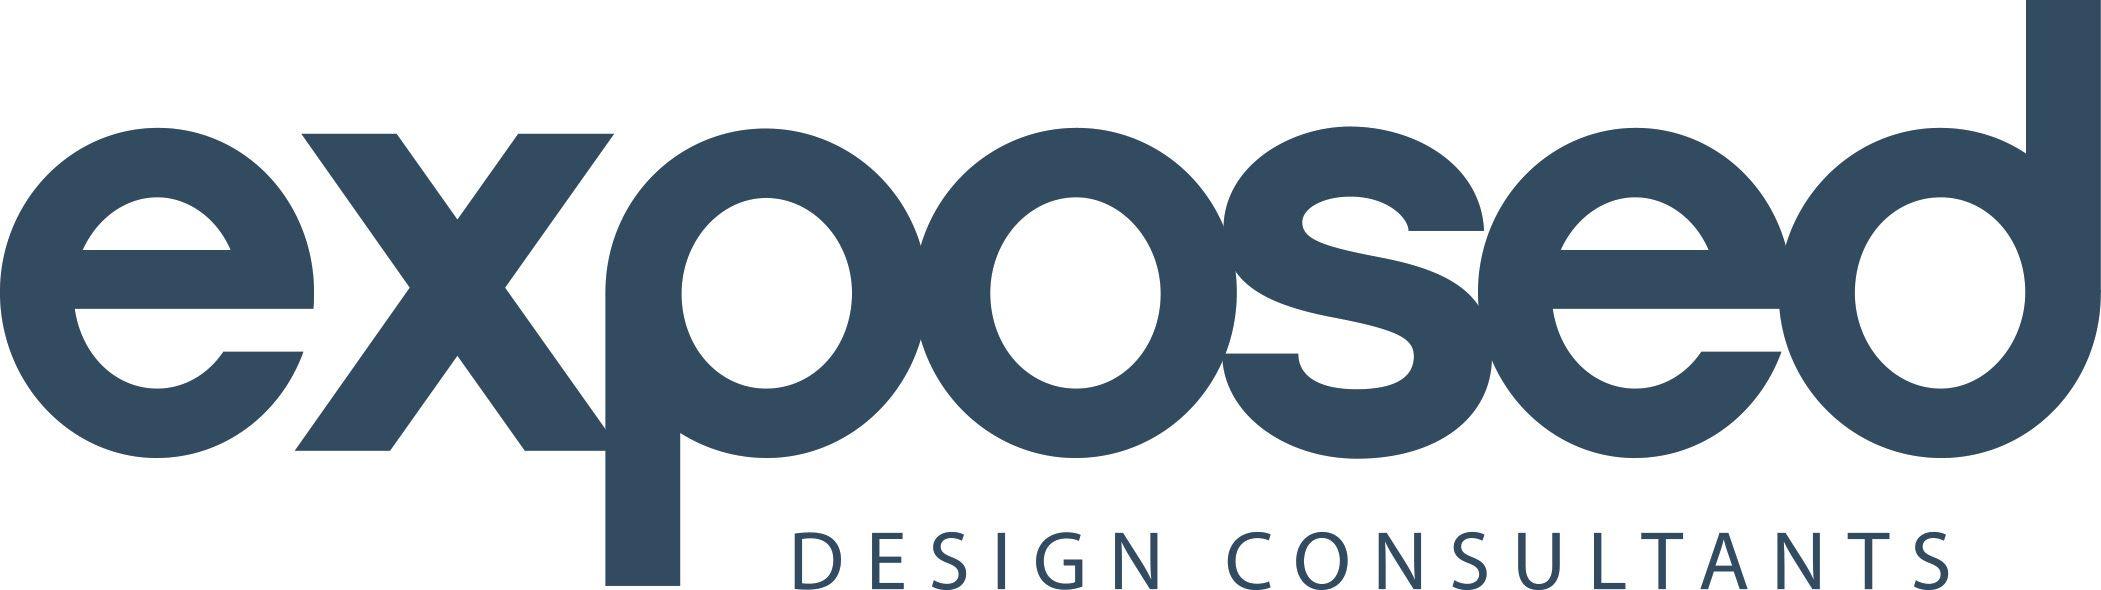 686 Fashion Logo - Graphic Designers London | Exposed Design Consultants - Fashion ...